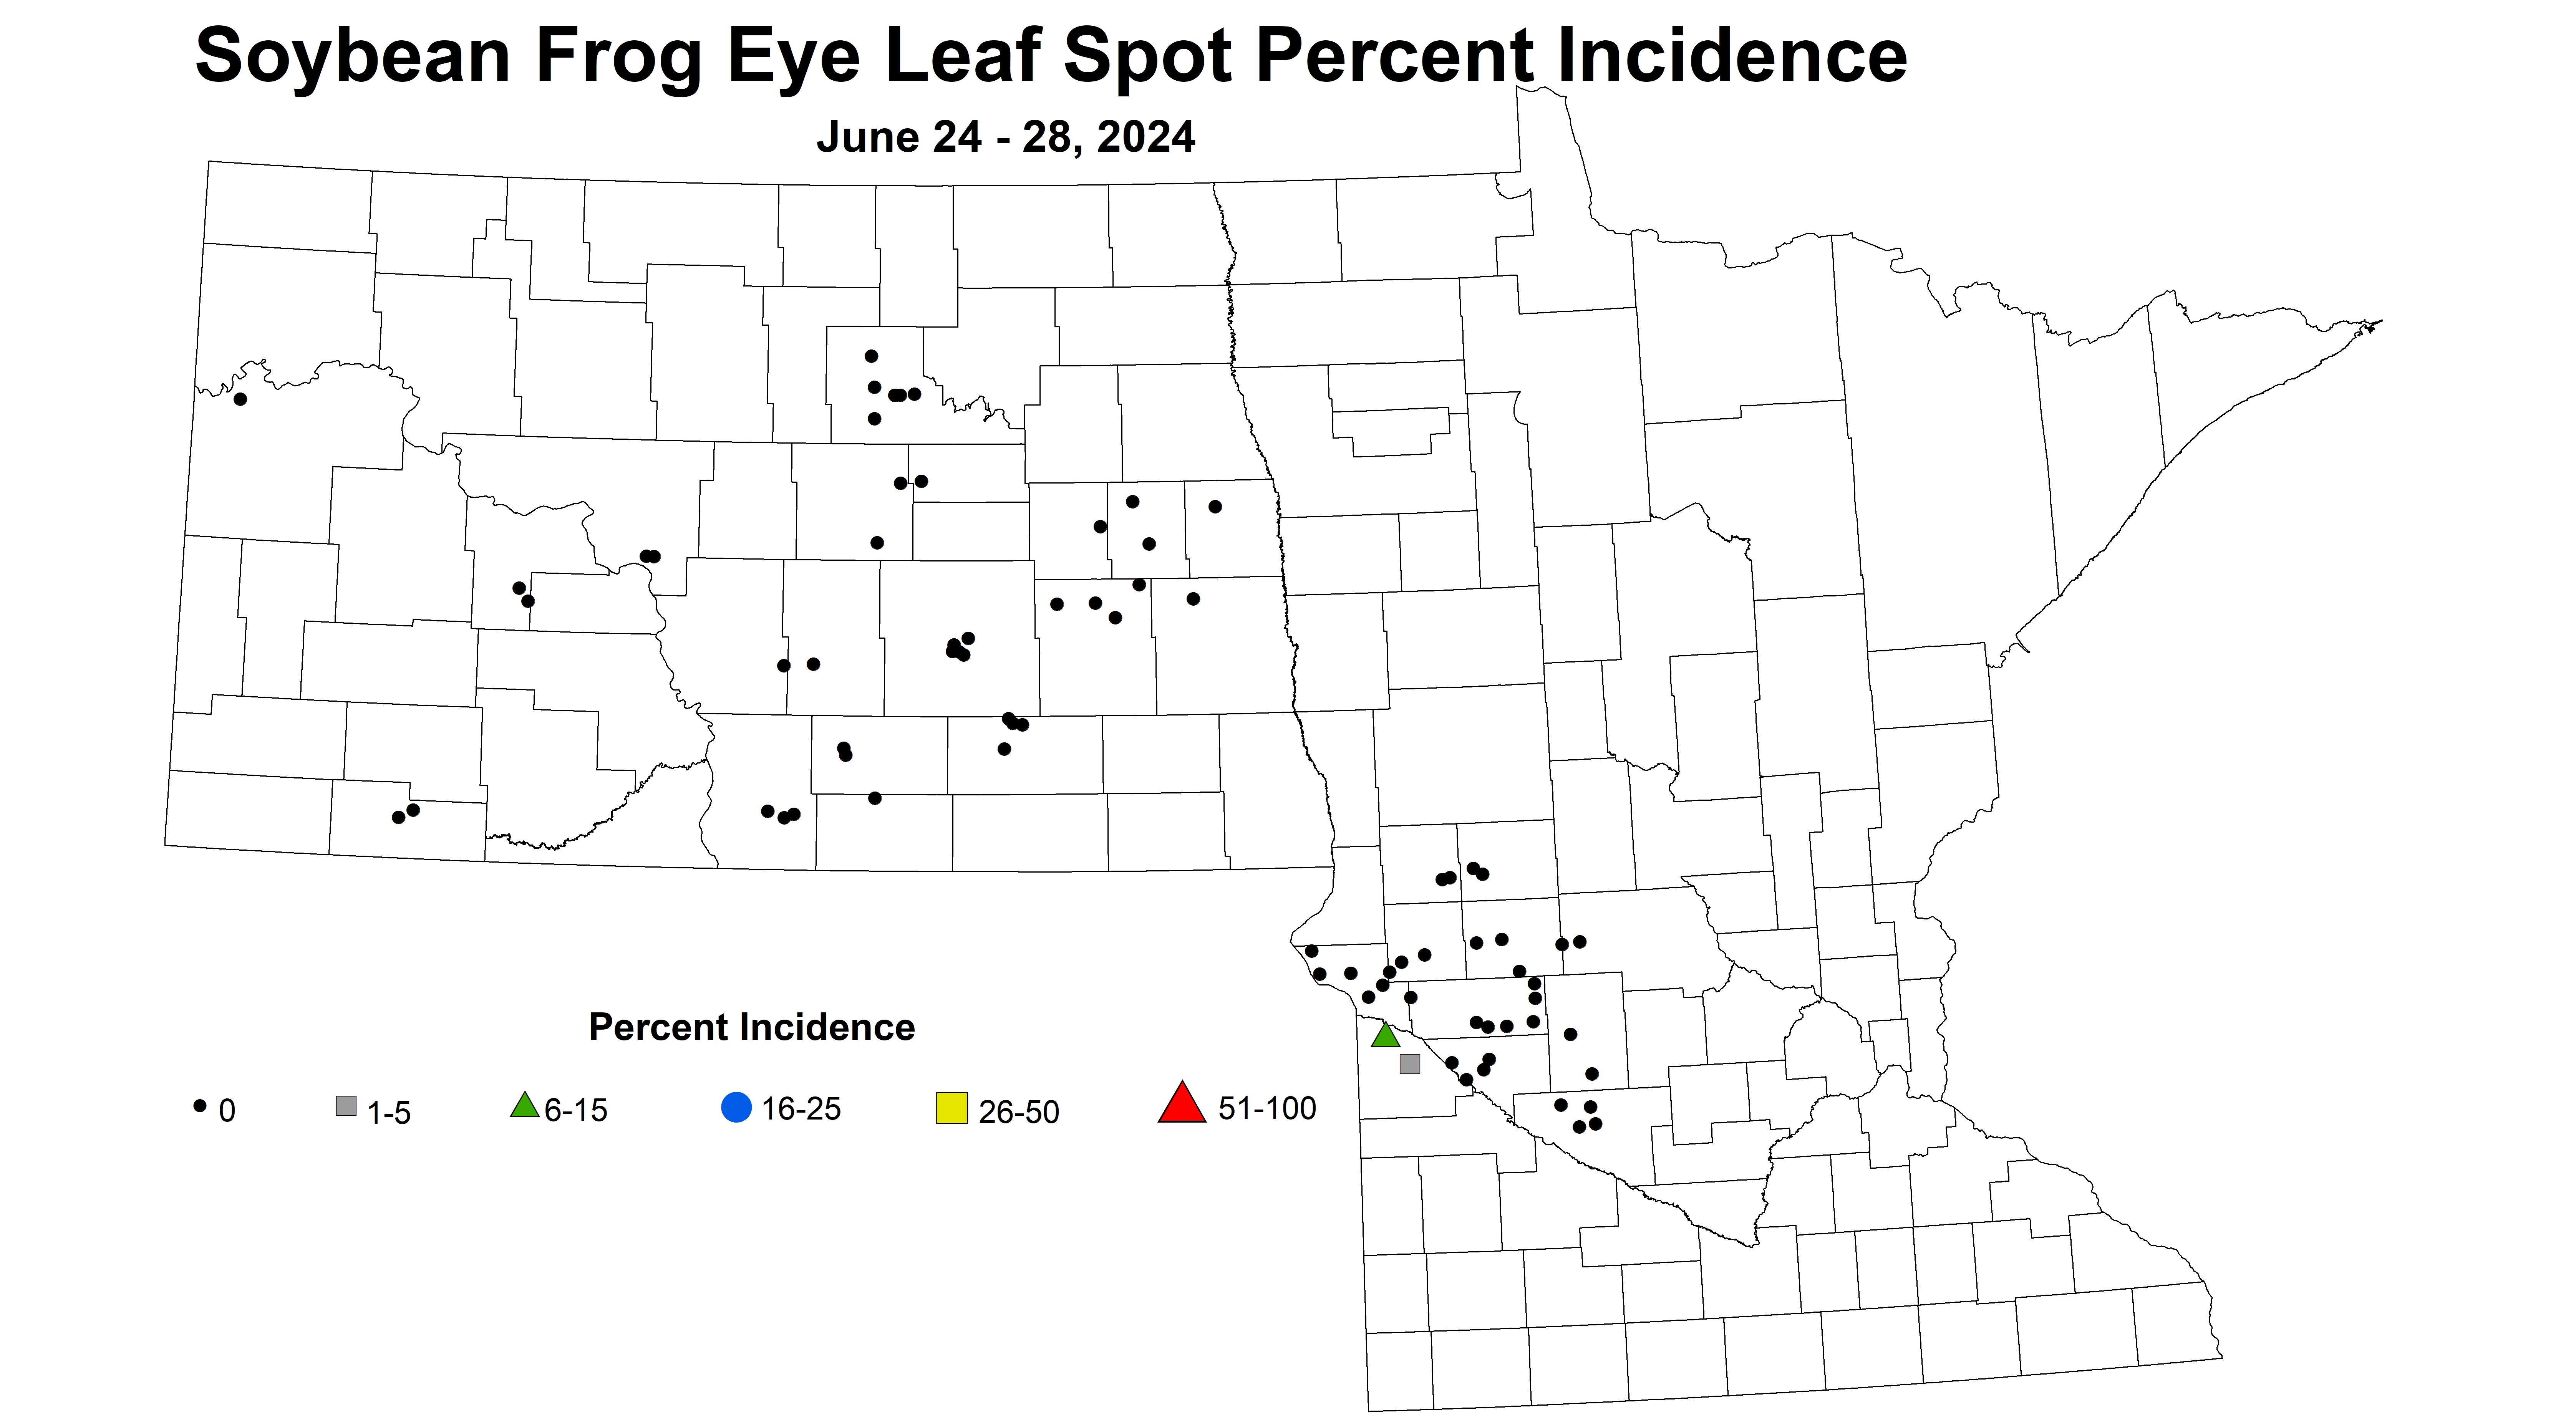 soybean frog eye leaf spot incidence June 24-28 2024